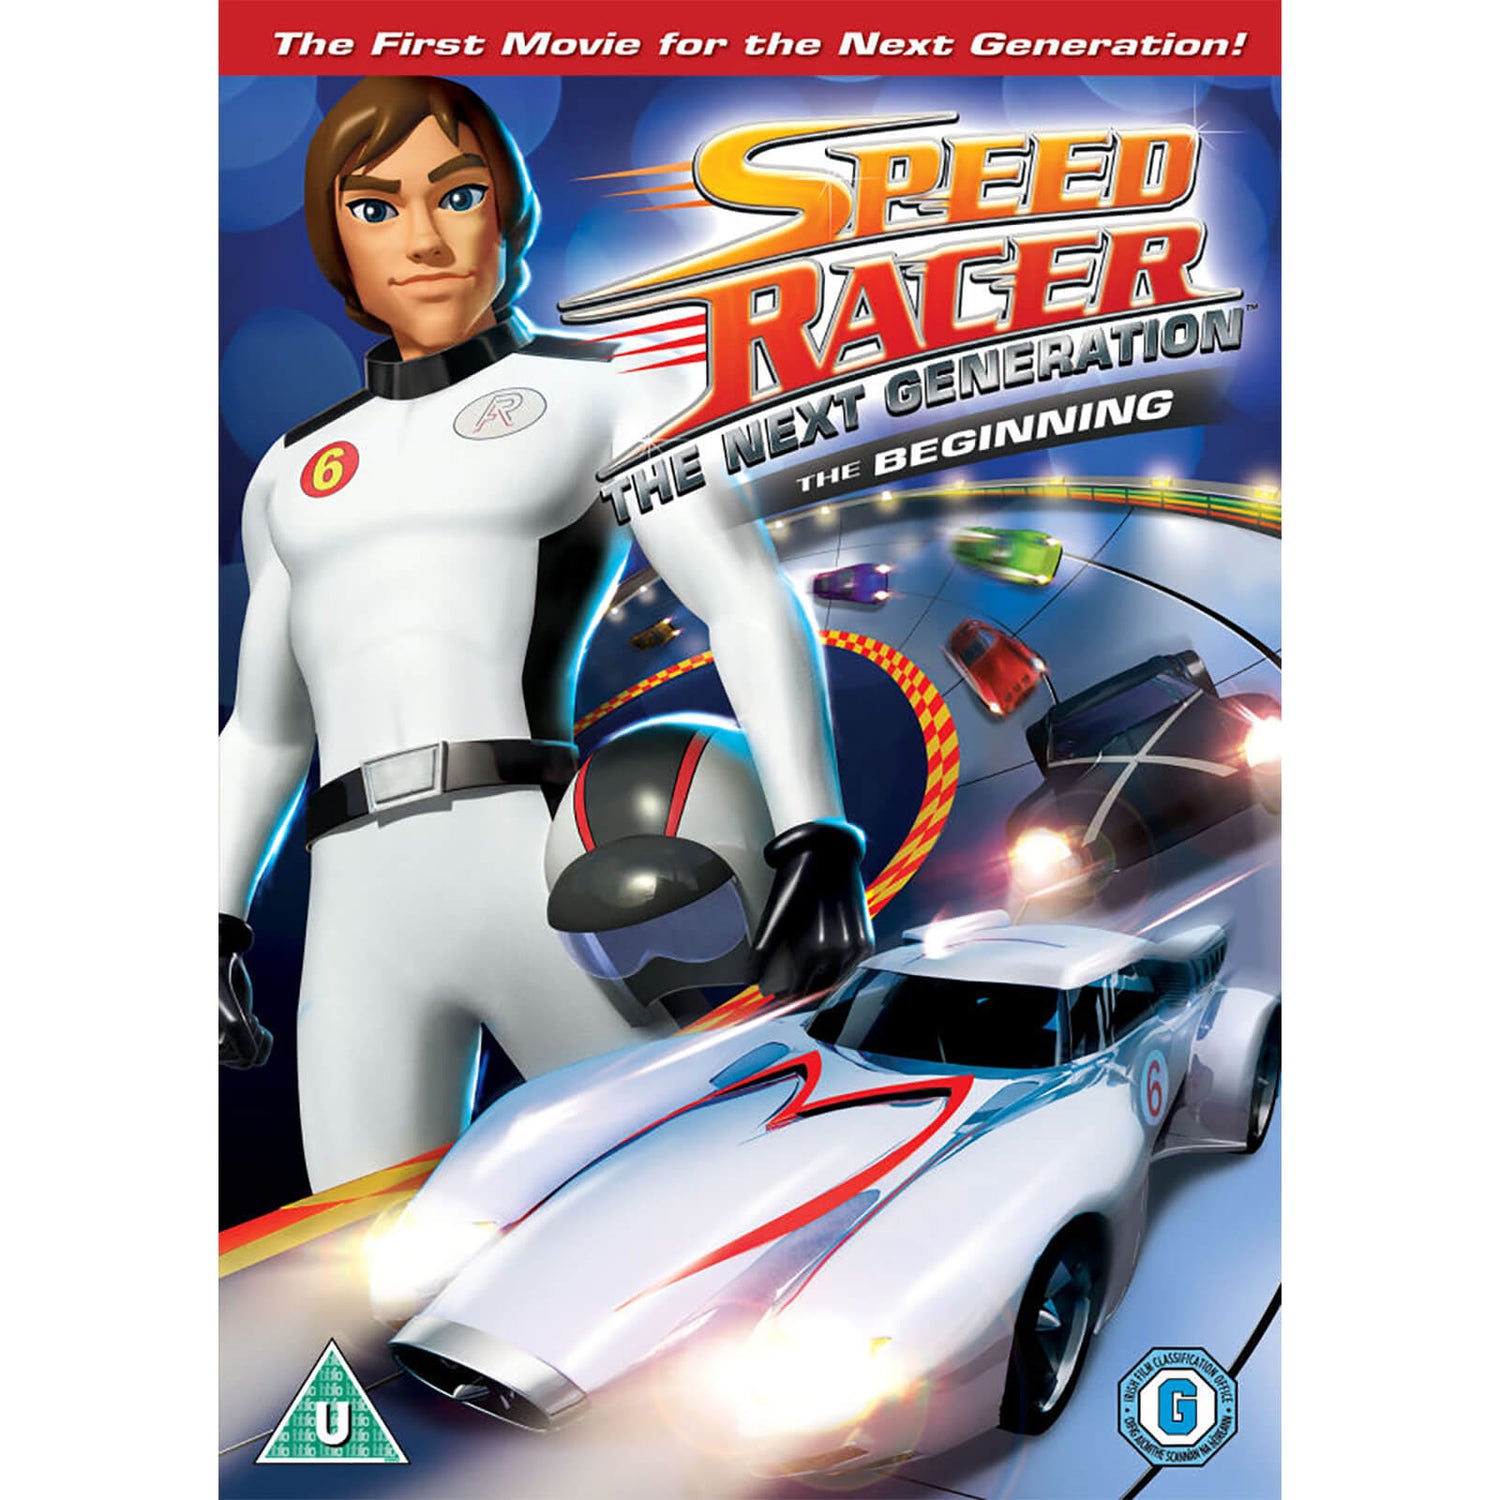 Speed Racer: Next Generation - The Beginning